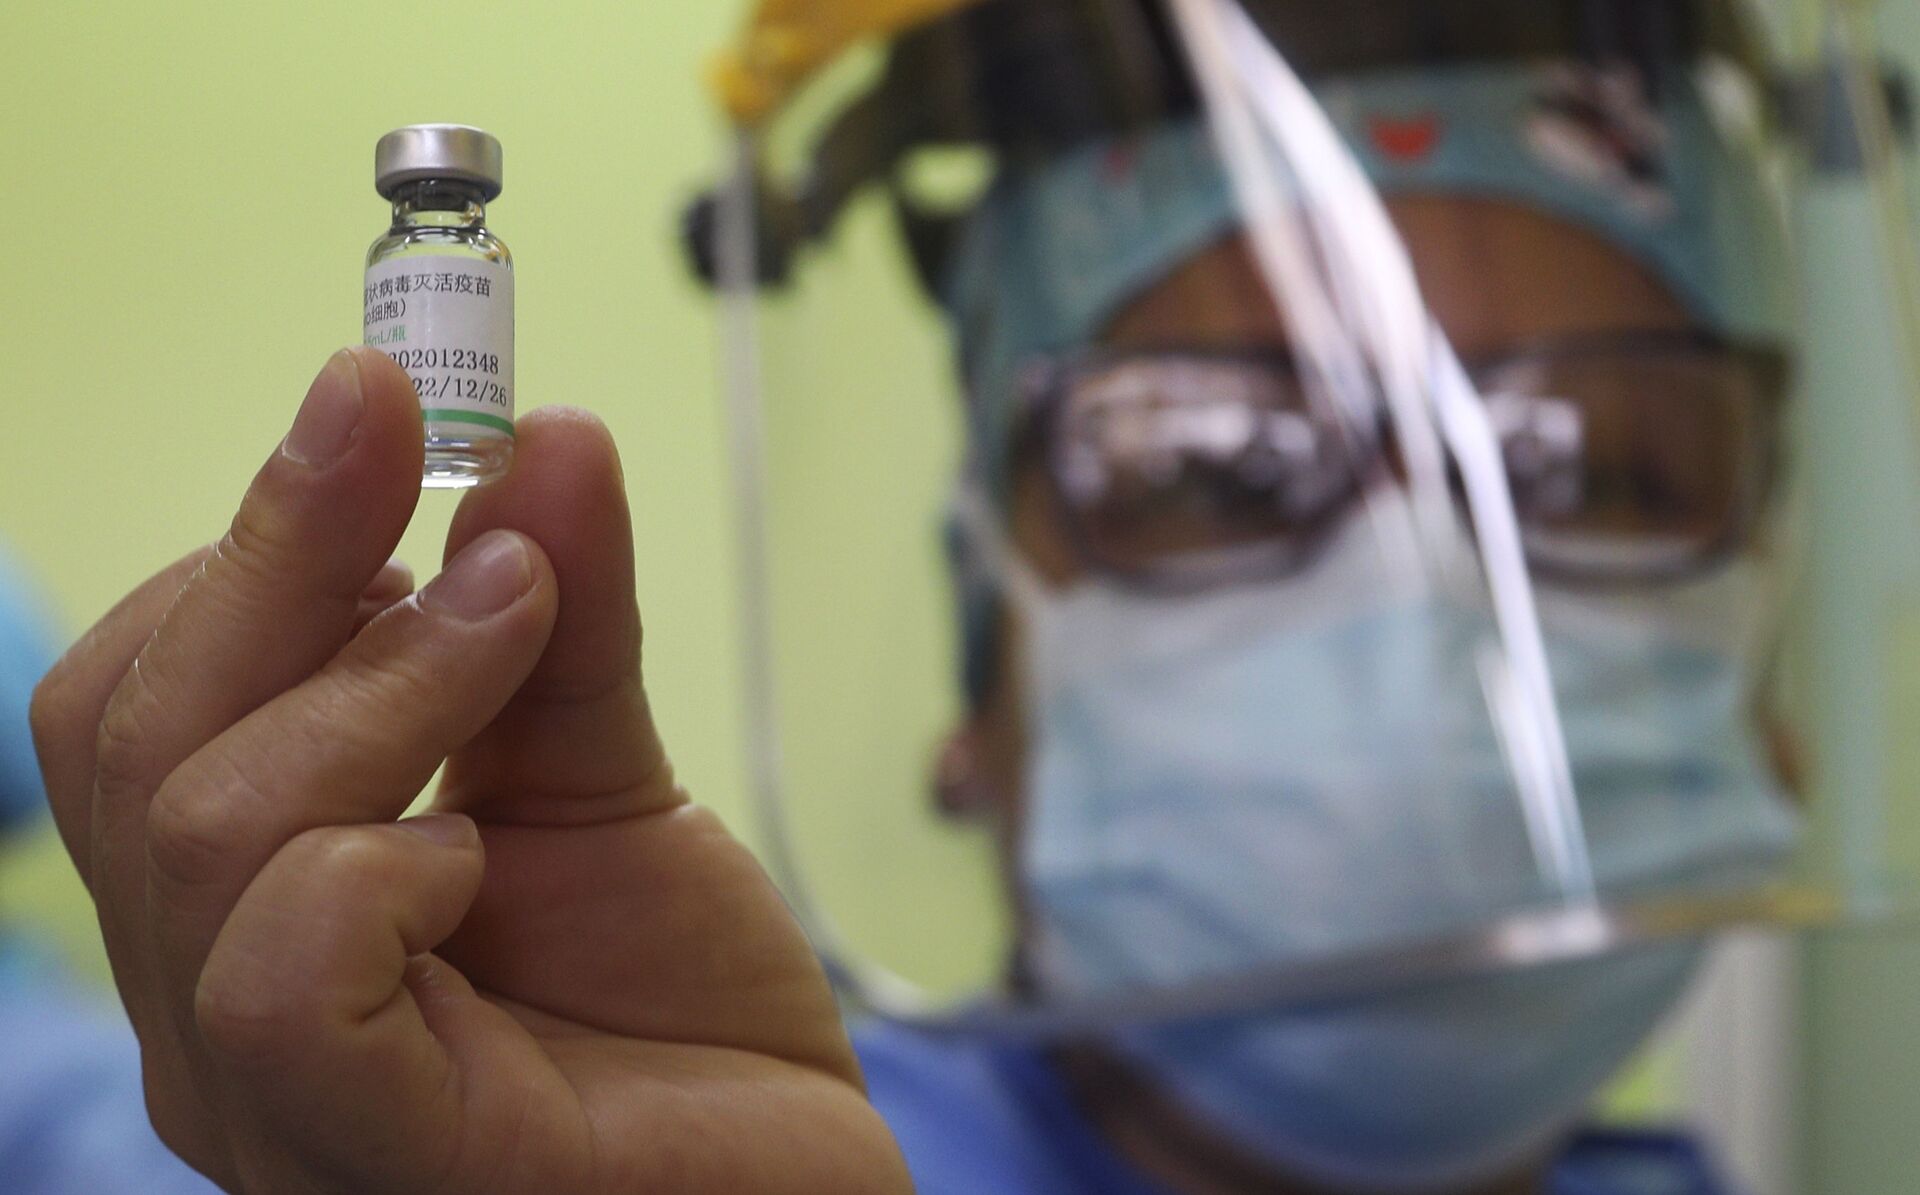 China aprova testes clínicos para 16 novas vacinas contra a COVID-19 - Sputnik Brasil, 1920, 21.02.2021